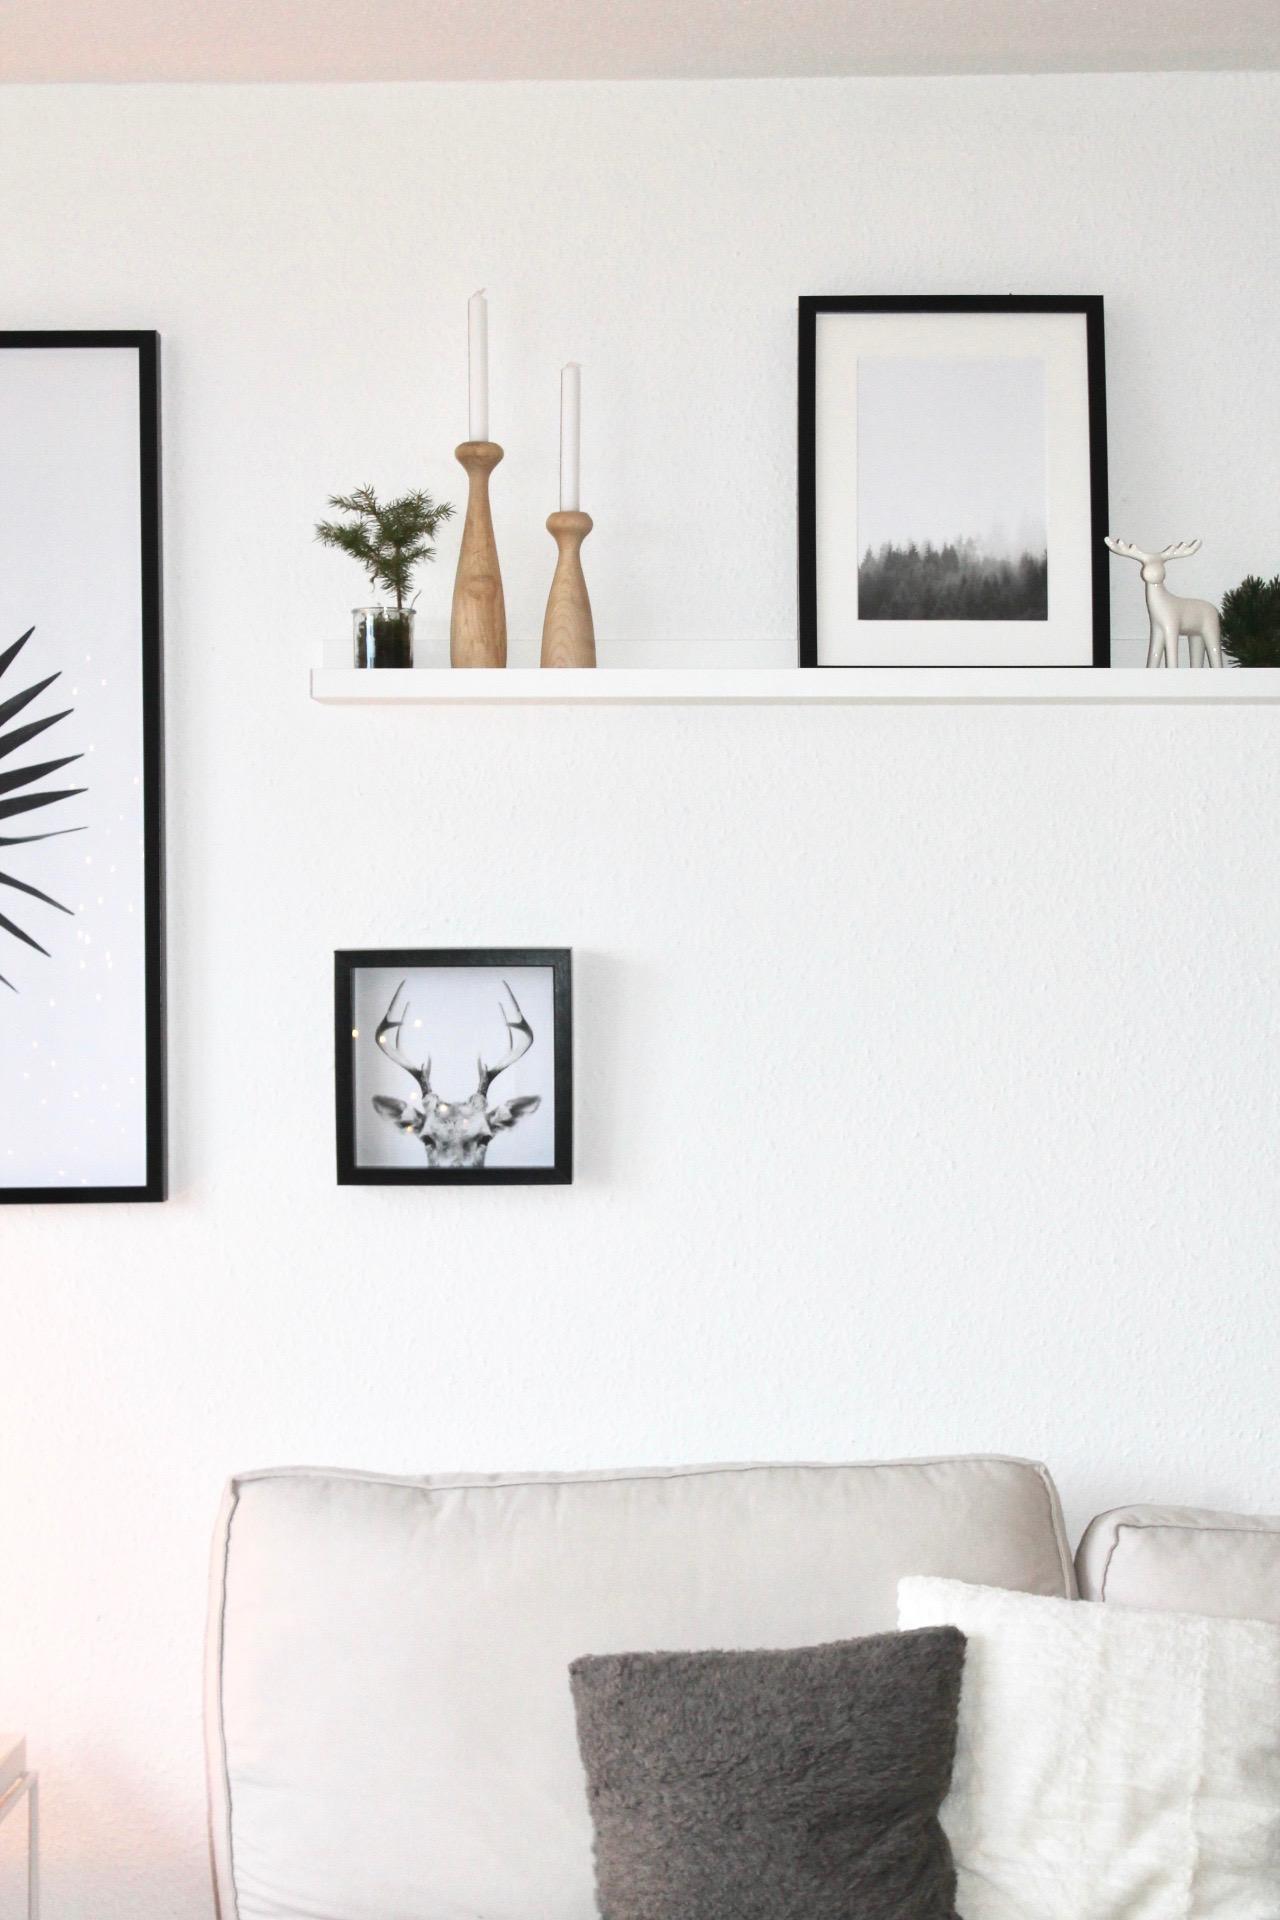 Bilderleiste neu dekoriert #wohnzimmer #bilderrahmen #ikea #poster #sofa #bilderleiste #ikearegal #juniqe ©www.koenigskram.de